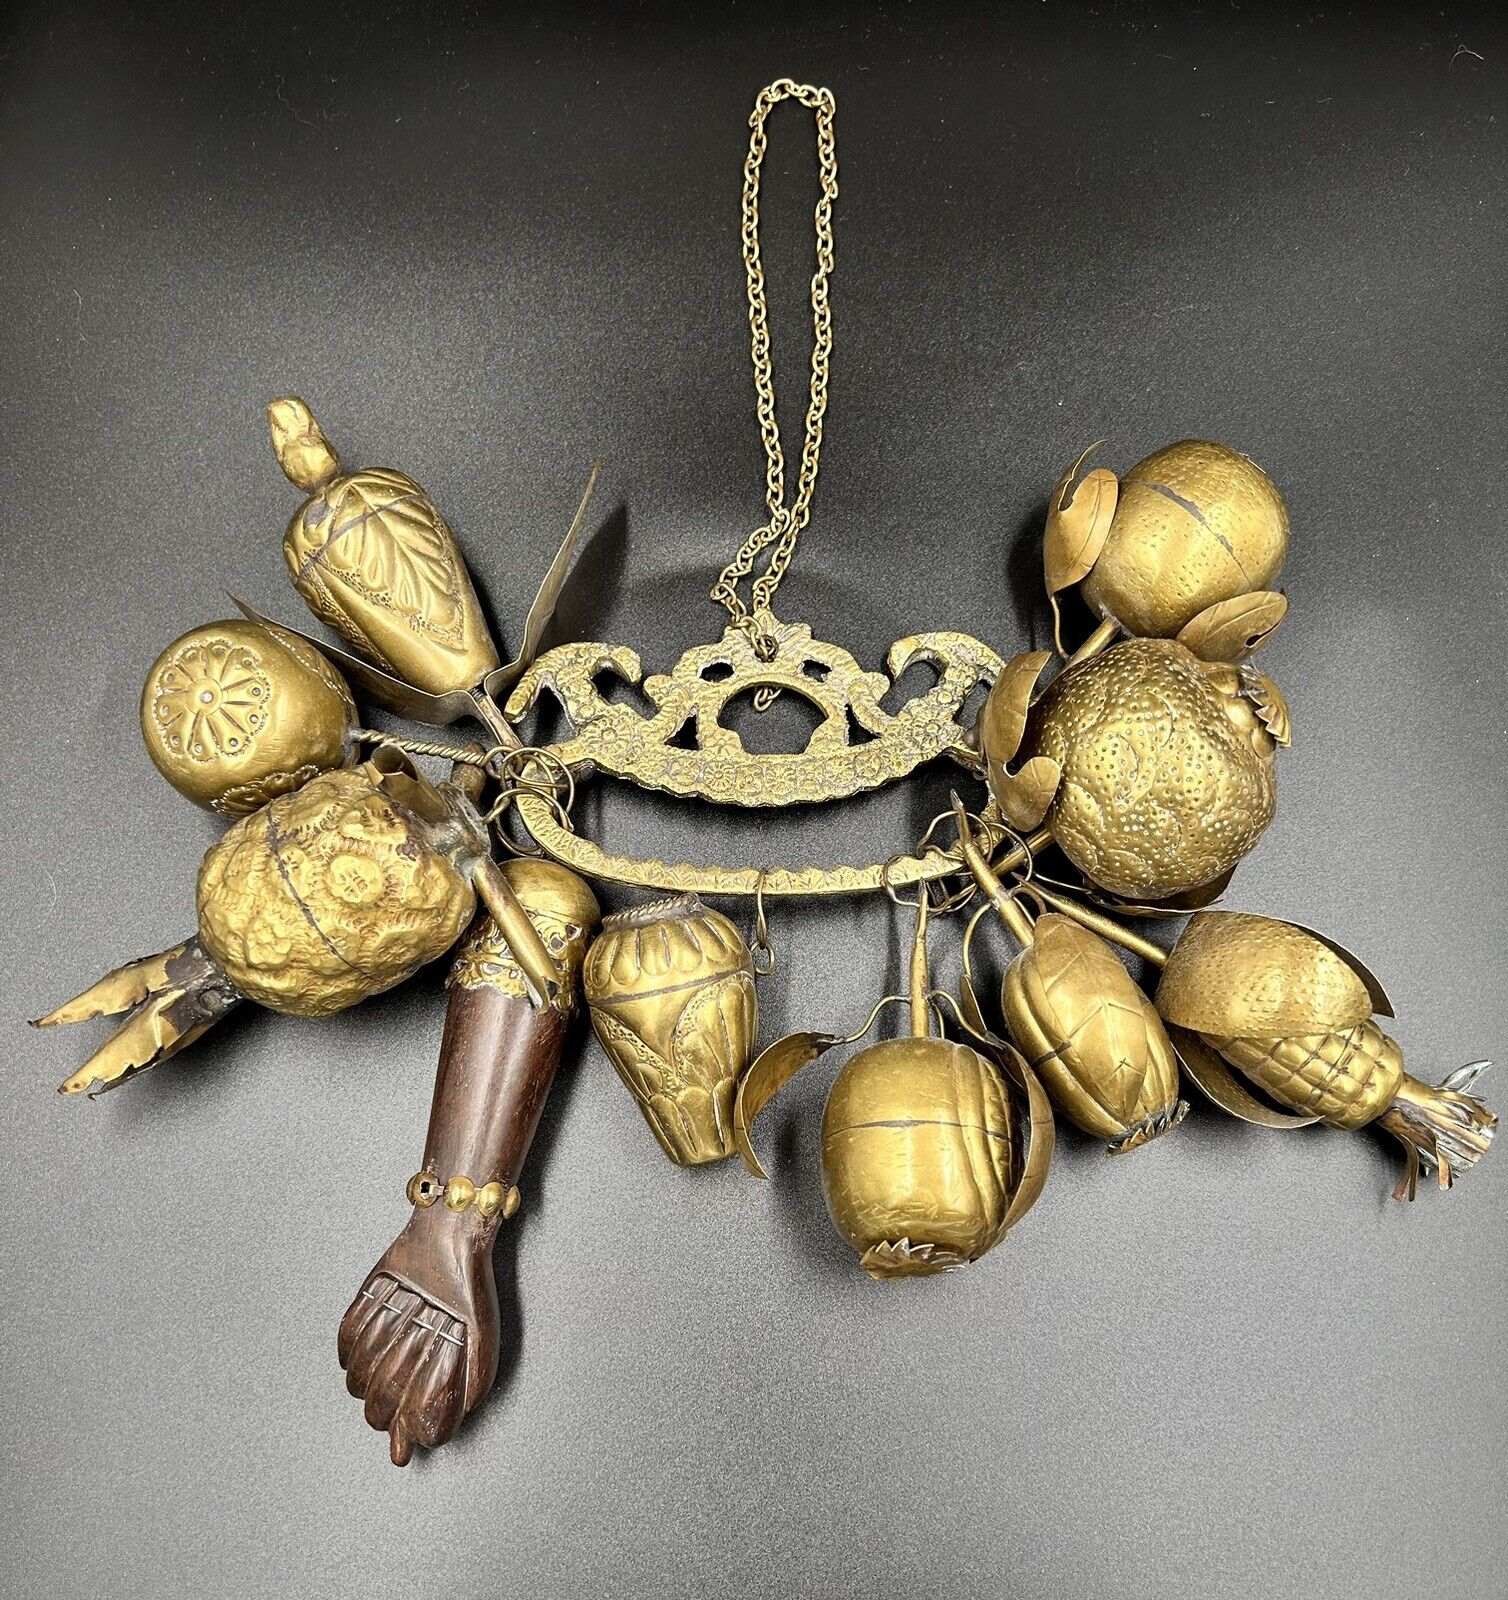 Antique LARGE Penca de Balangandan South American Slave Amulet Jewelry 10 Charms